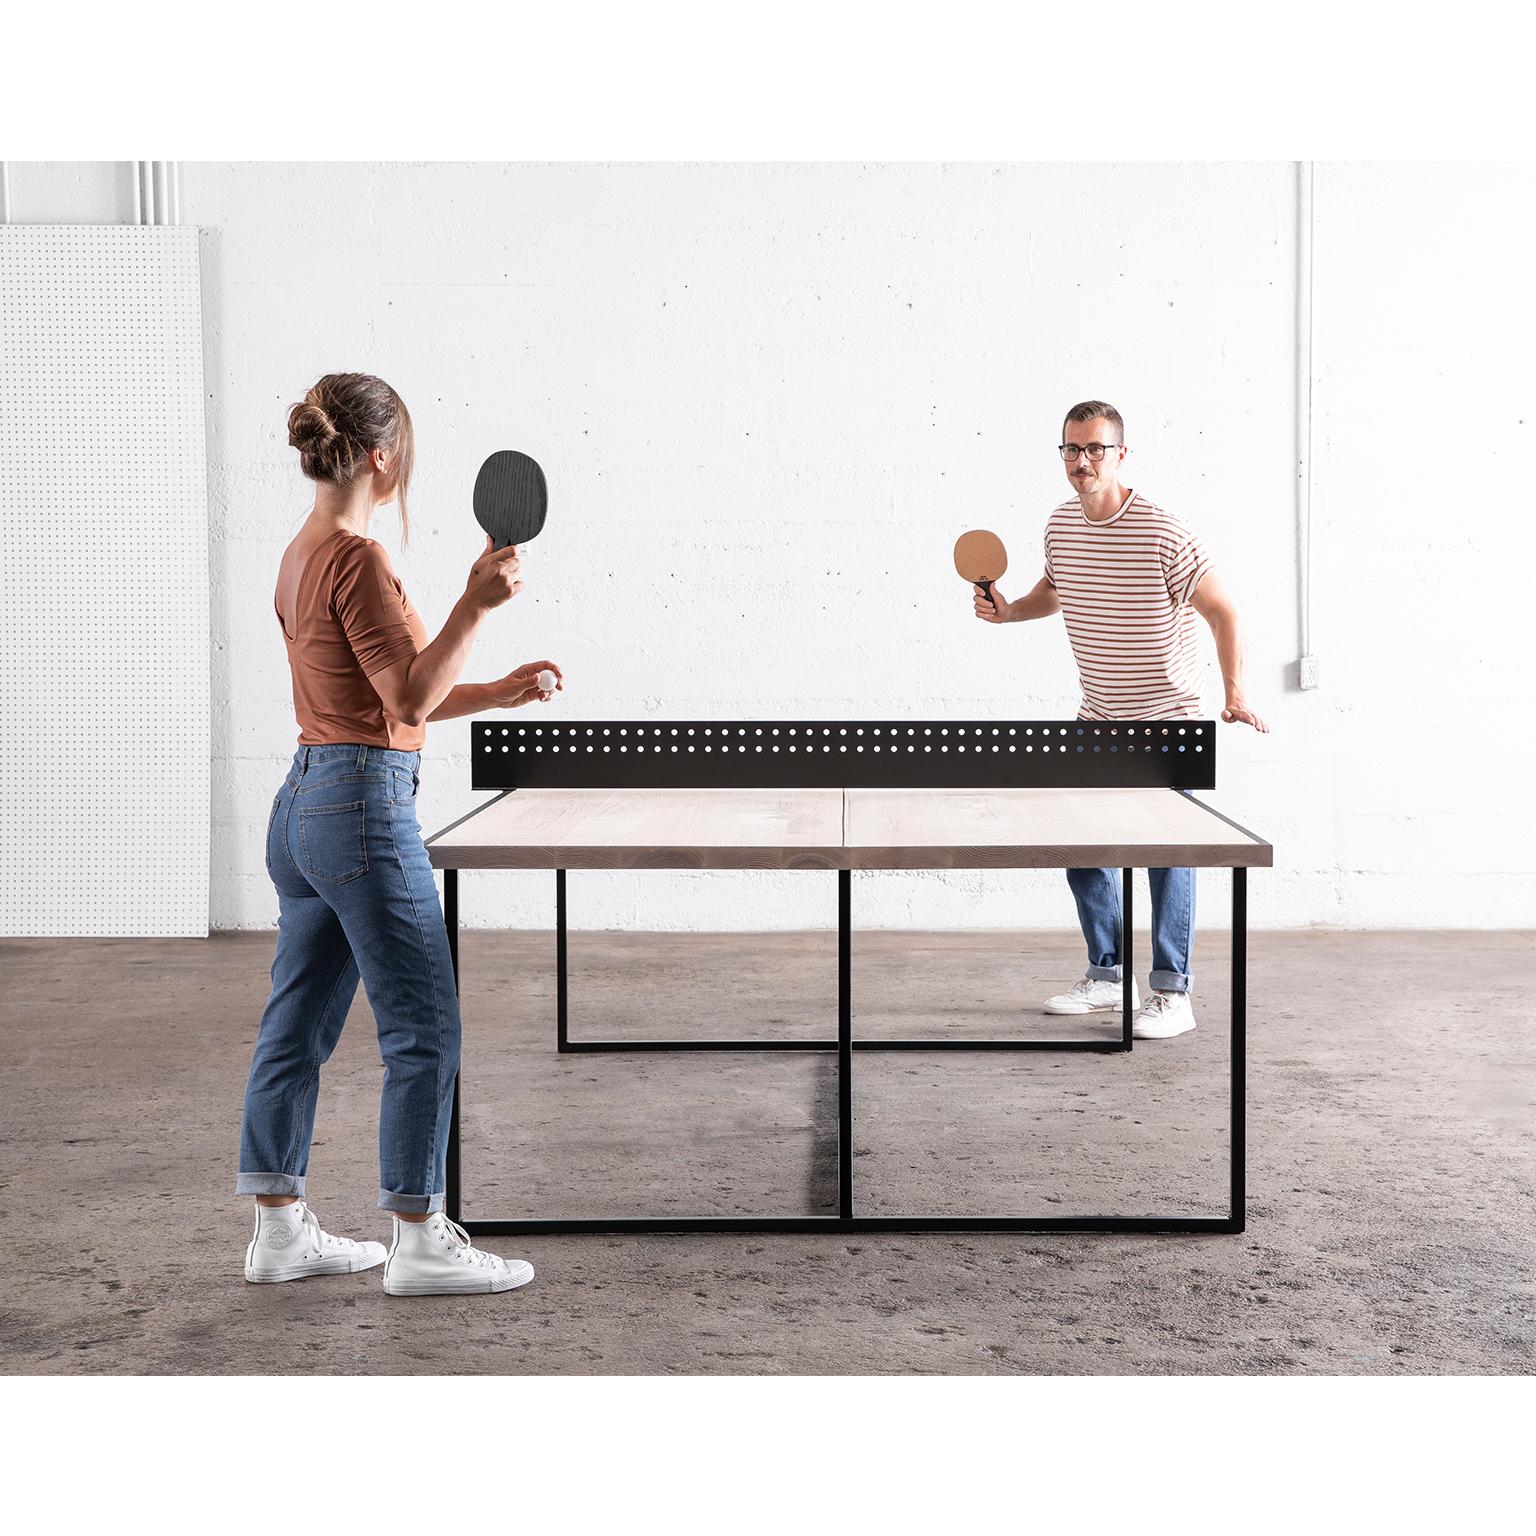 Anpassbarer moderner „The Break“ Ping Pong-Tisch (Moderne) im Angebot